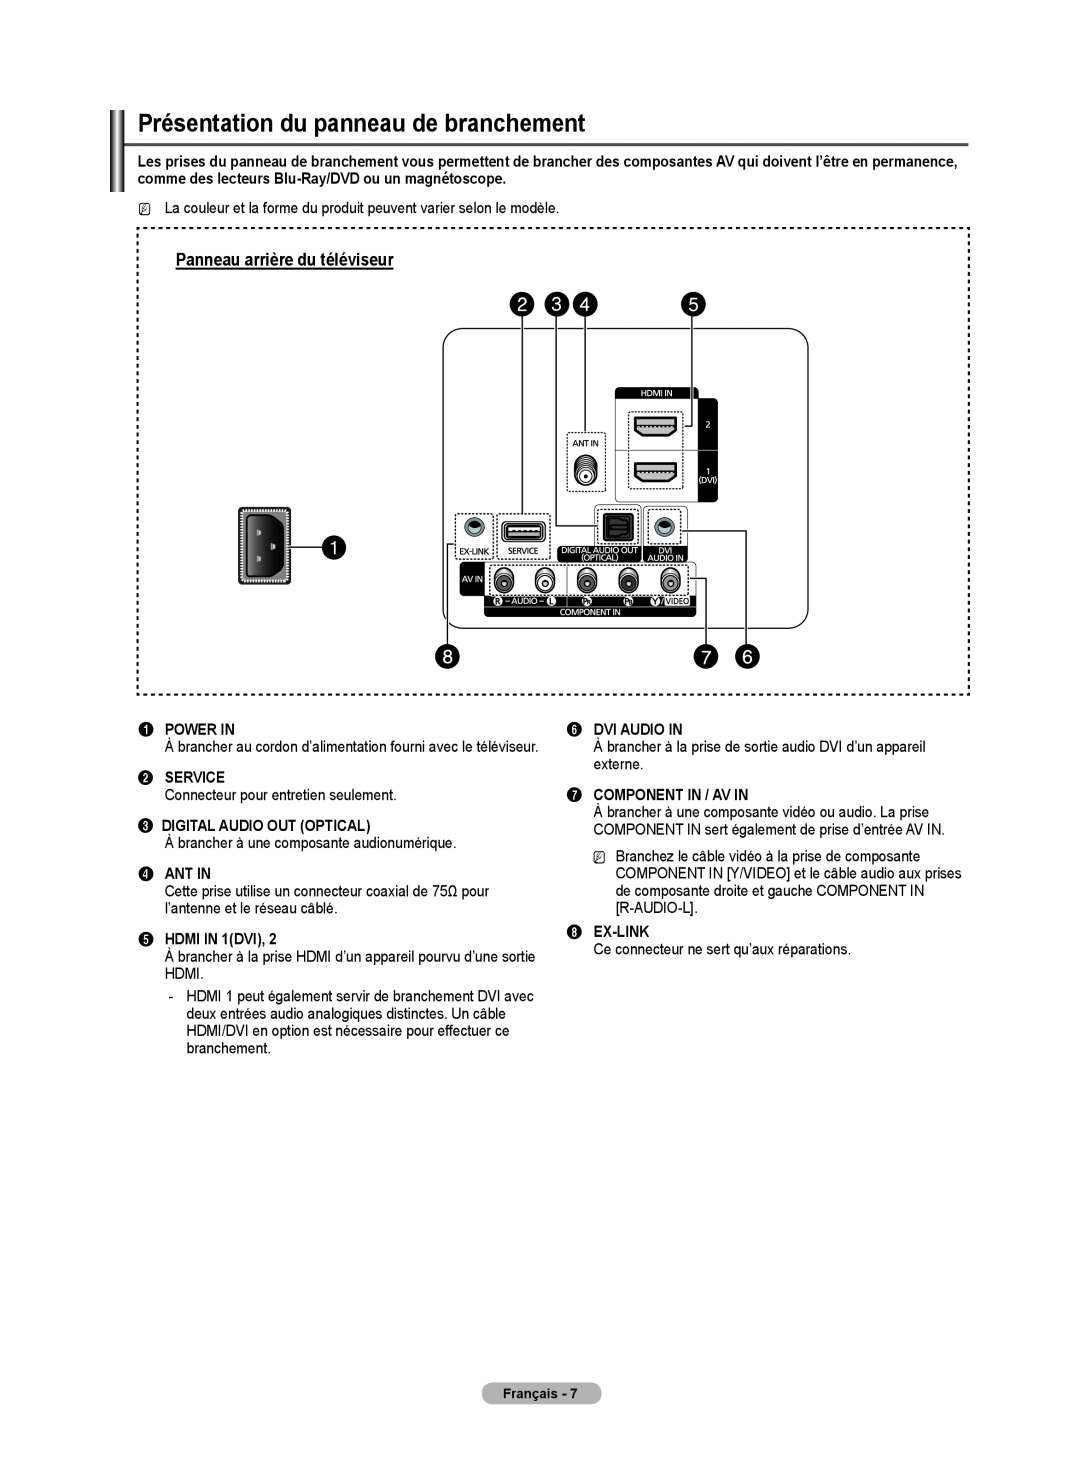 Samsung BN68-02426A-00 Panneau arrière du téléviseur, Power In, Service, Digital Audio Out Optical, Ant In, HDMI IN 1DVI 